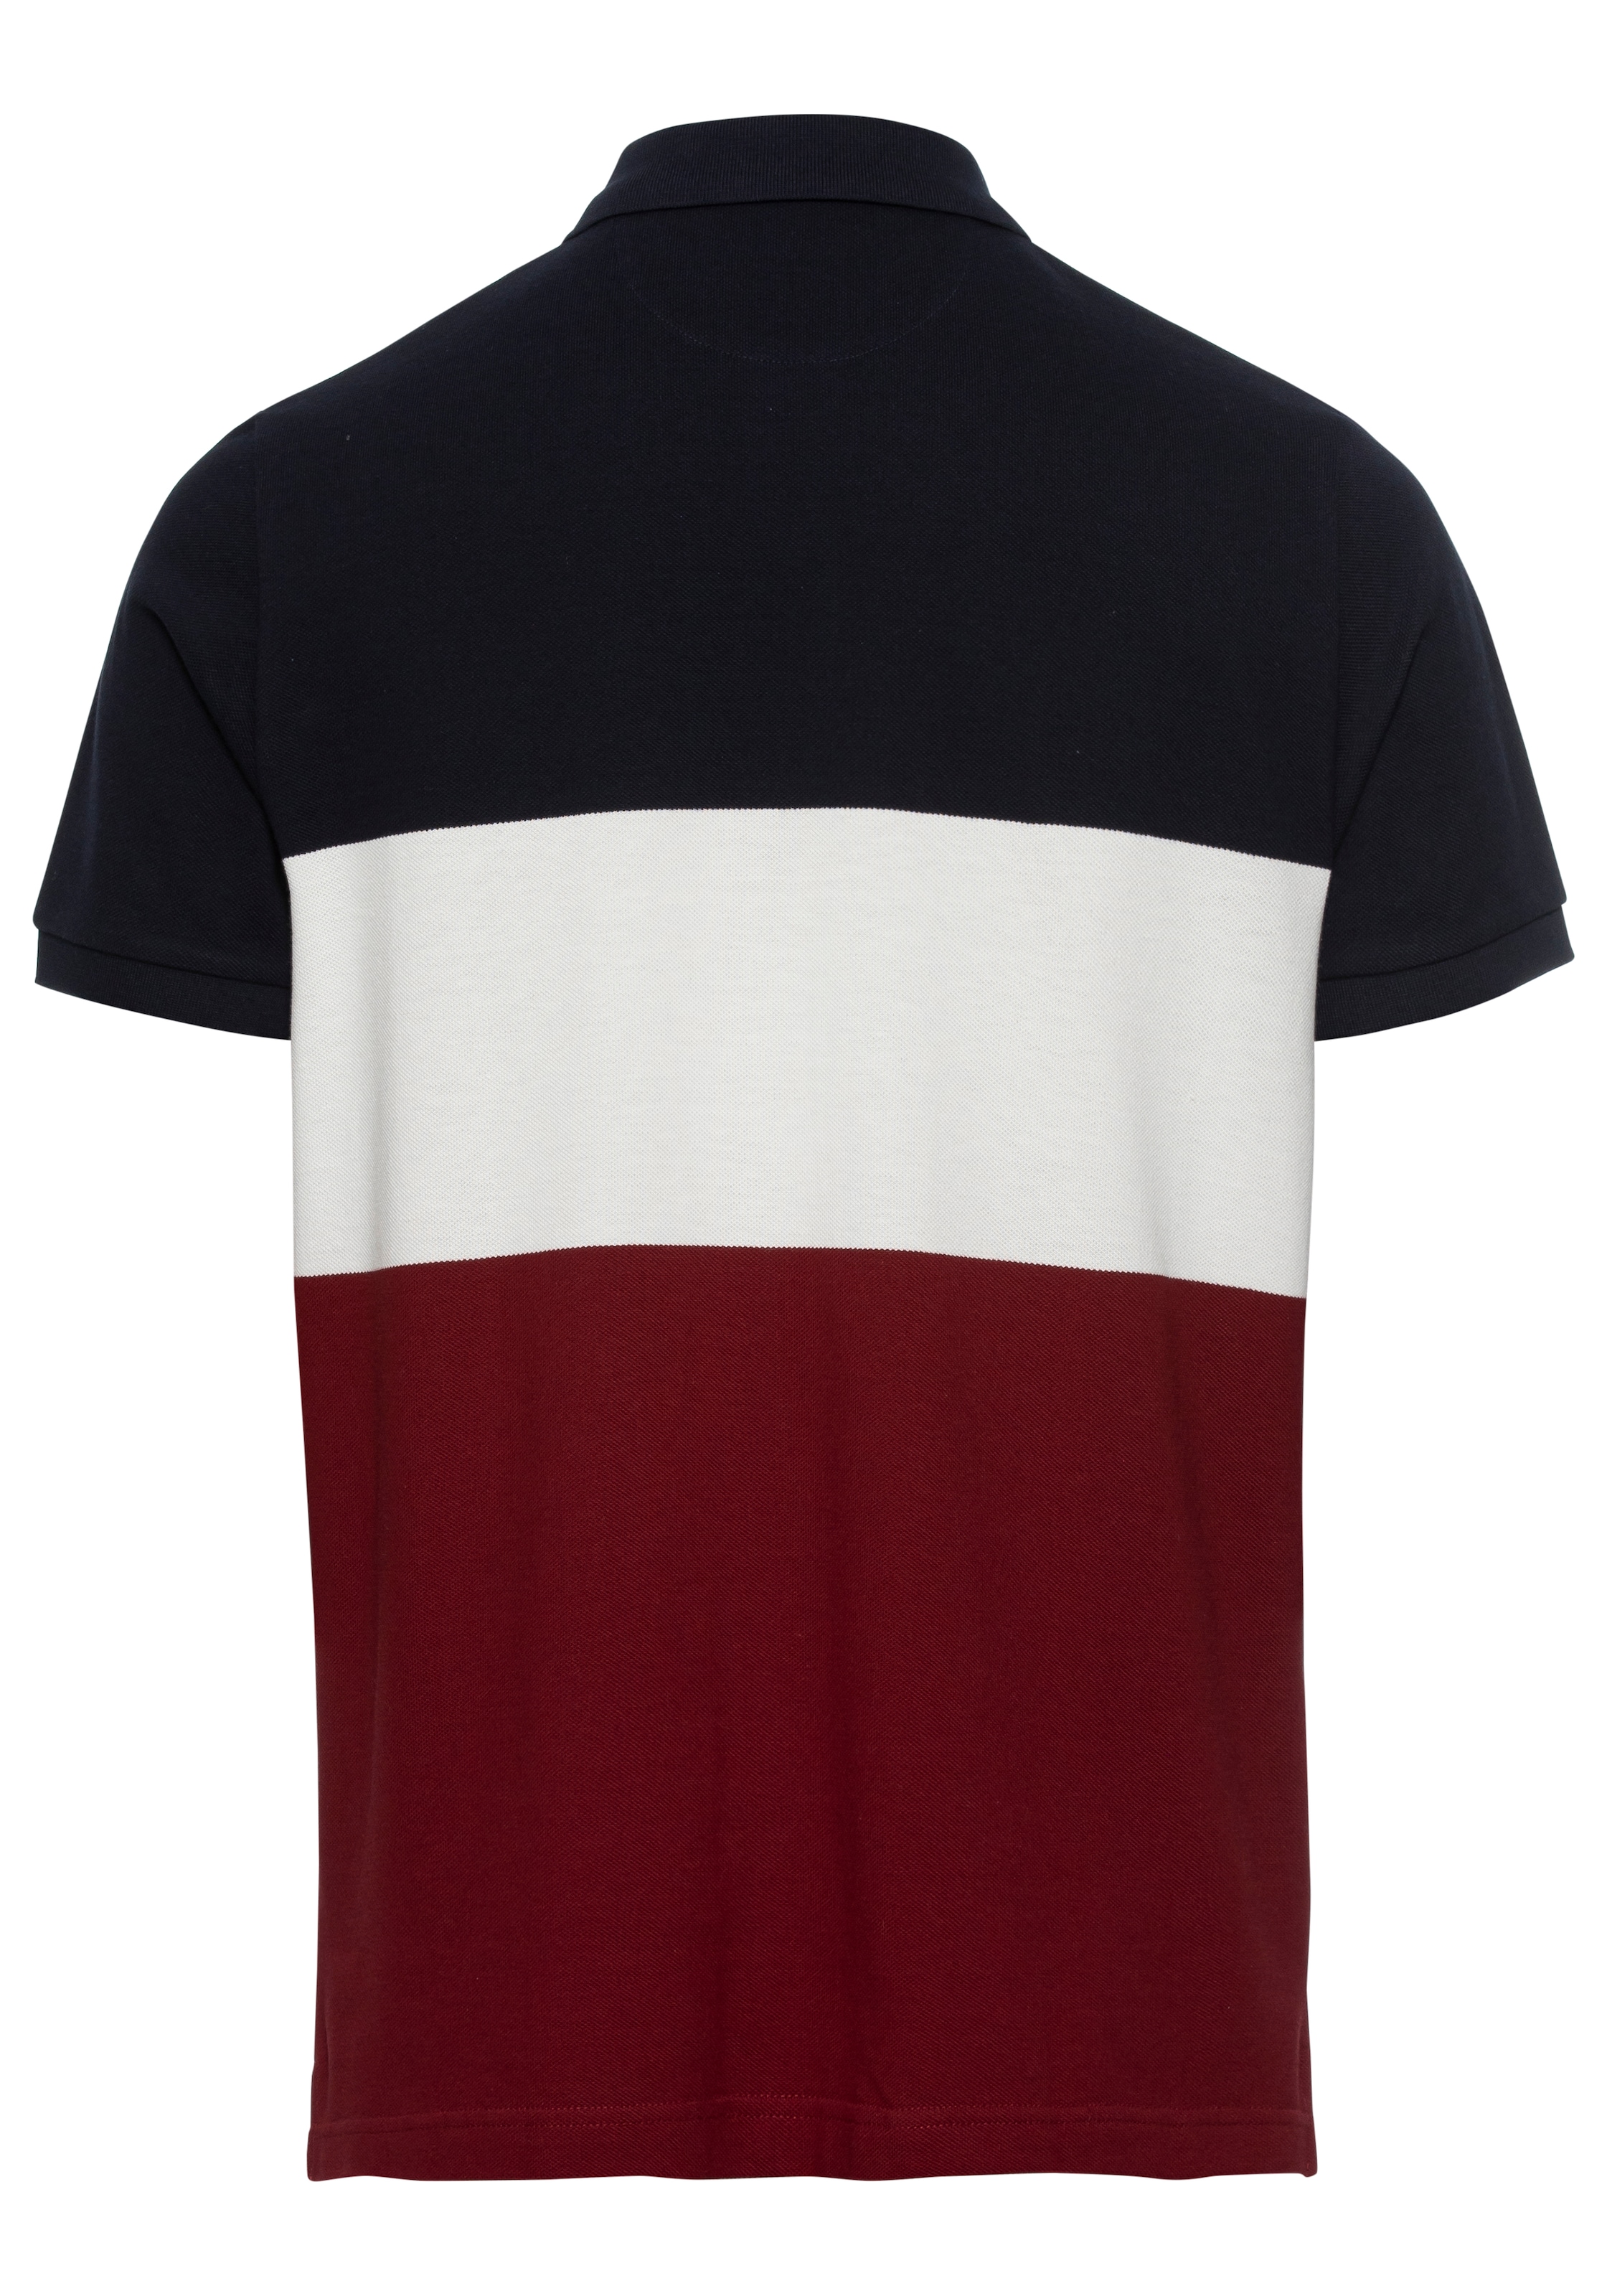 Gant Poloshirt »BLOCK STRIPE KA RUGGER«, dreiteiliger Farbmix für modernen Look